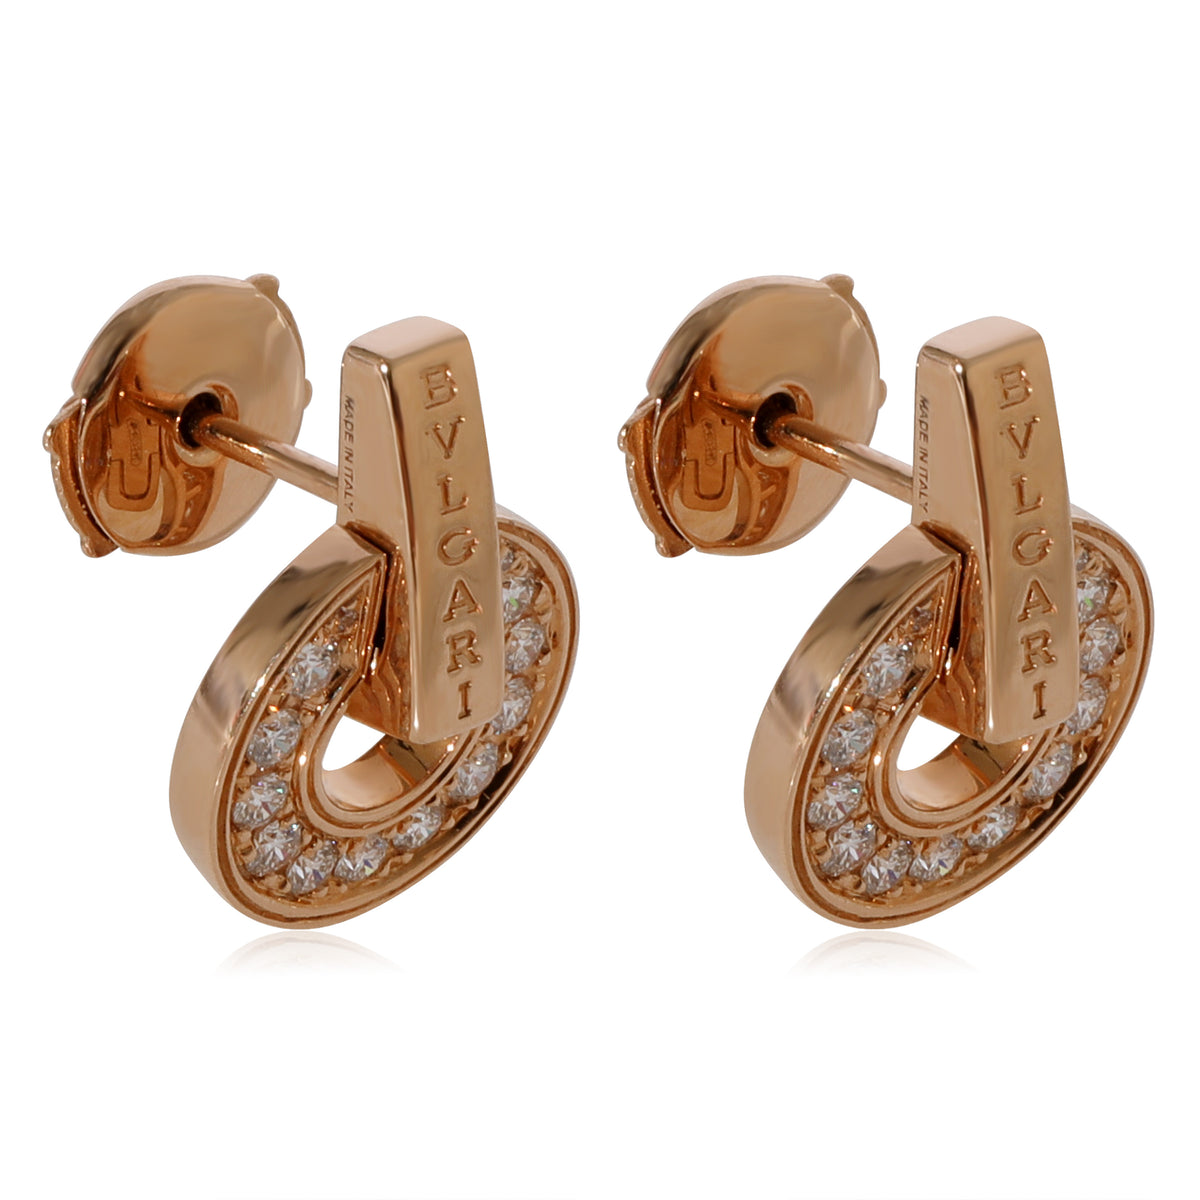 BVLGARI Serpenti Viper Diamond Earrings in 18K Rose Gold | Bvlgari earrings,  Bvlgari gold, Diamond earrings